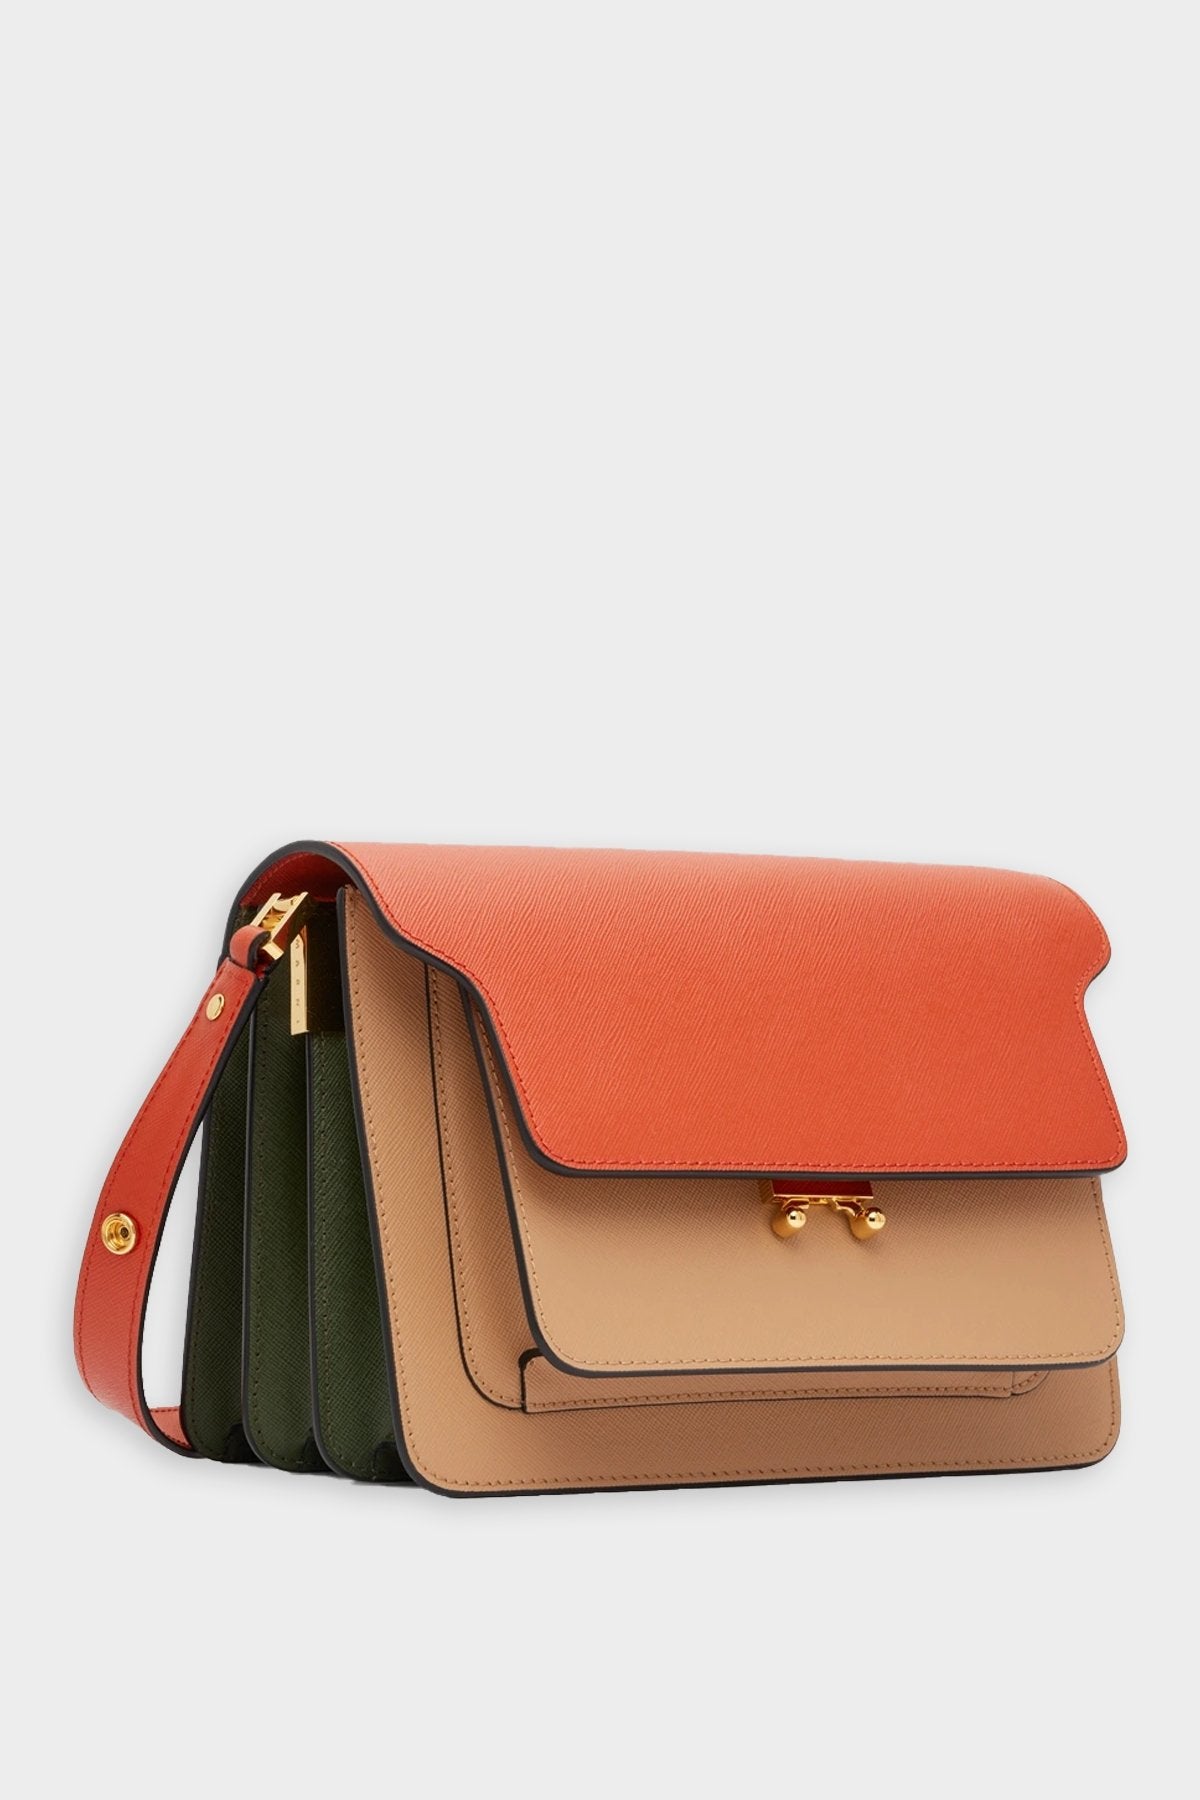 Medium Trunk Bag in Orange Beige Green - shop-olivia.com